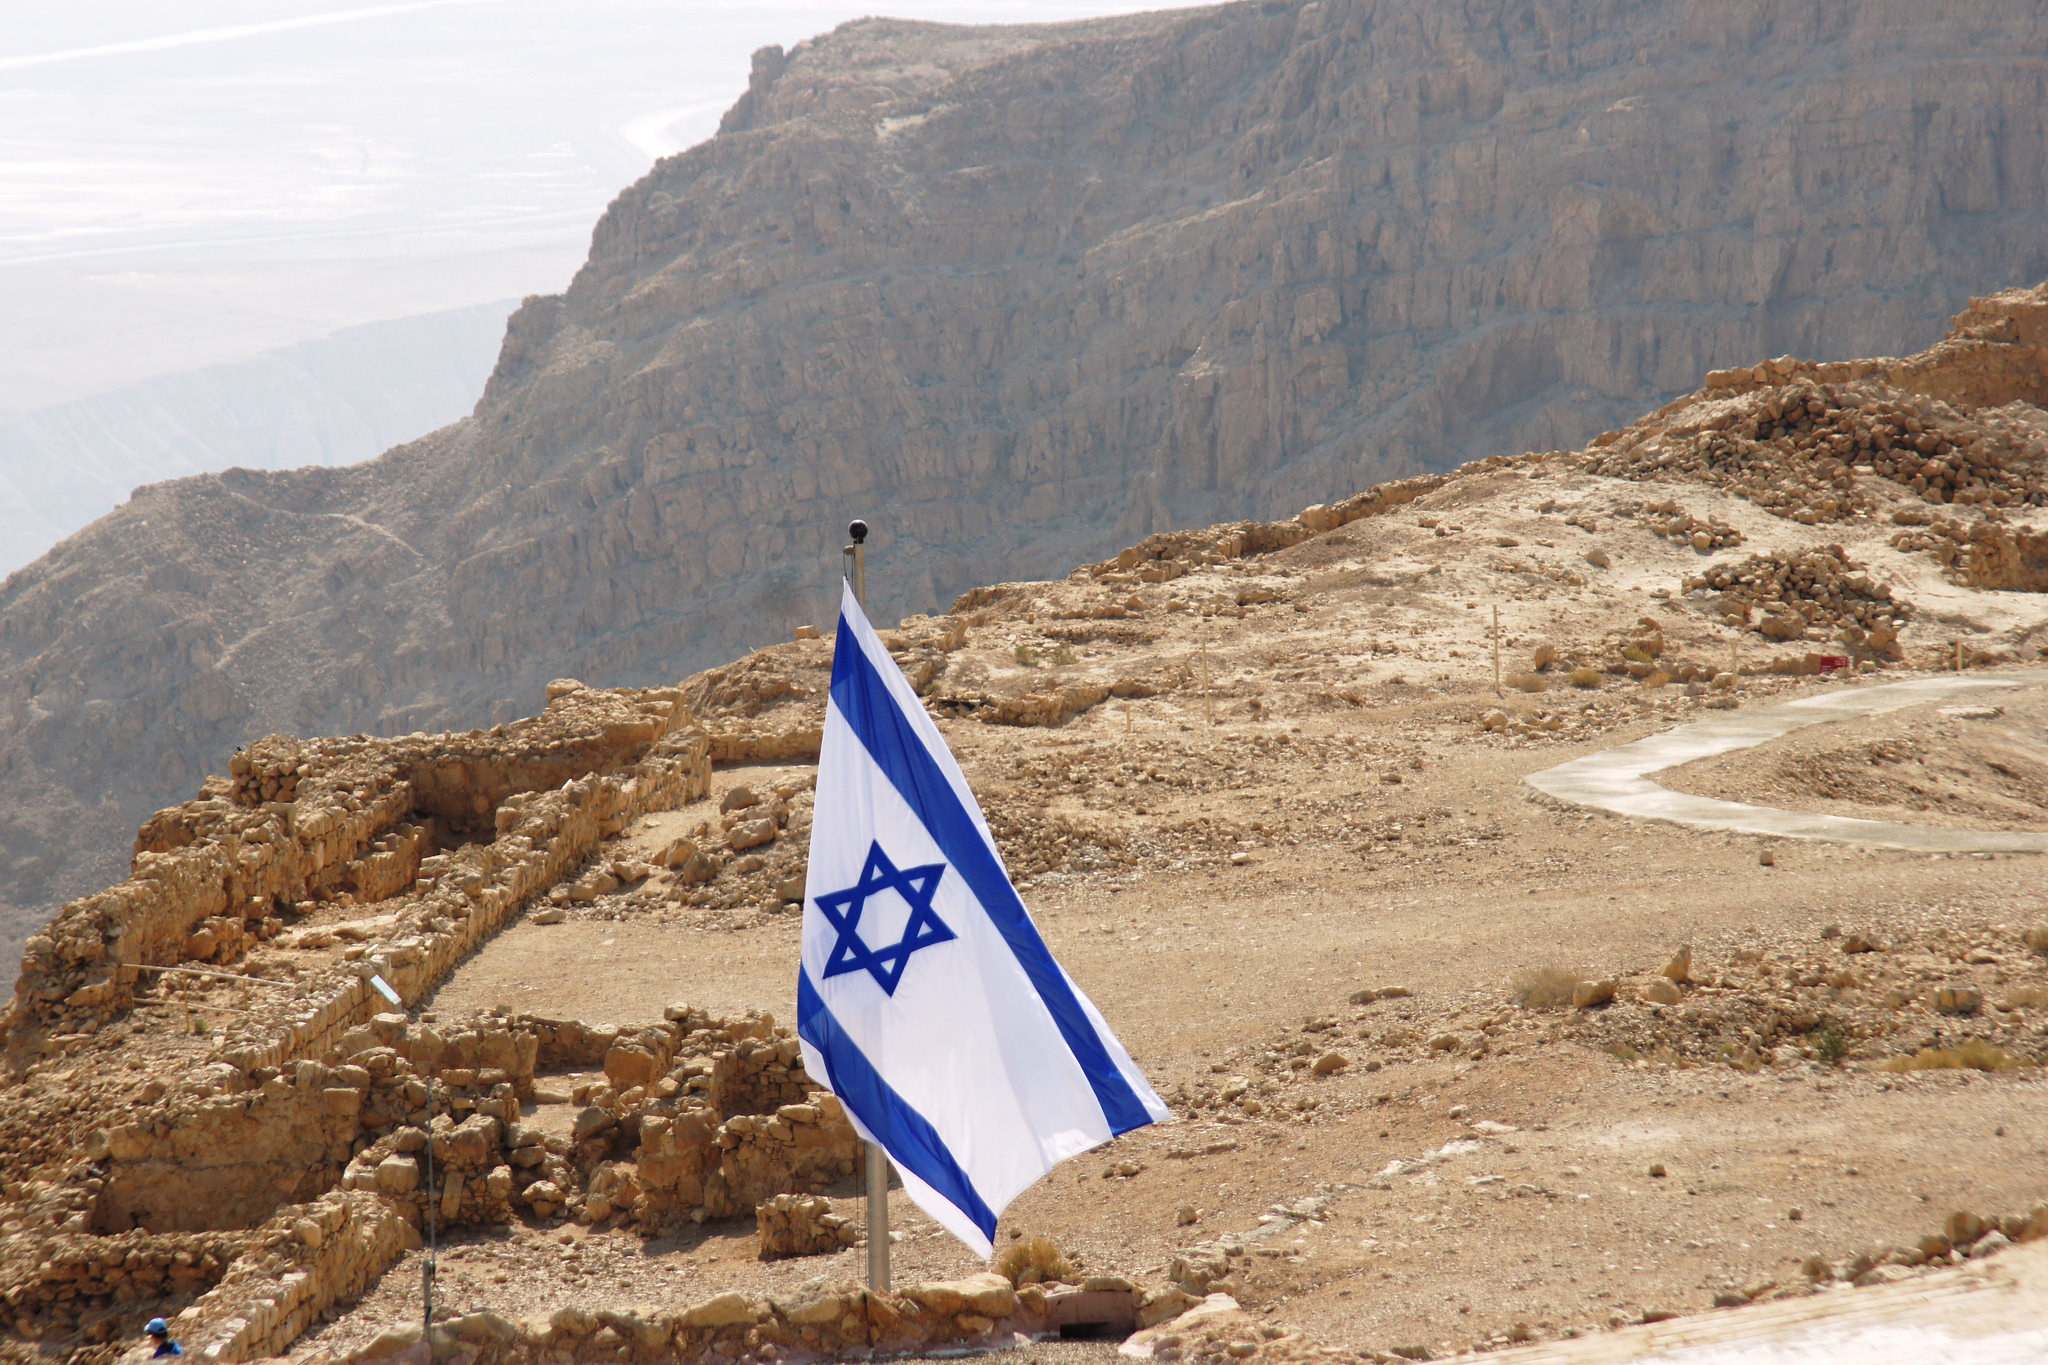 masada1 Masada Desert Fortress in Israel